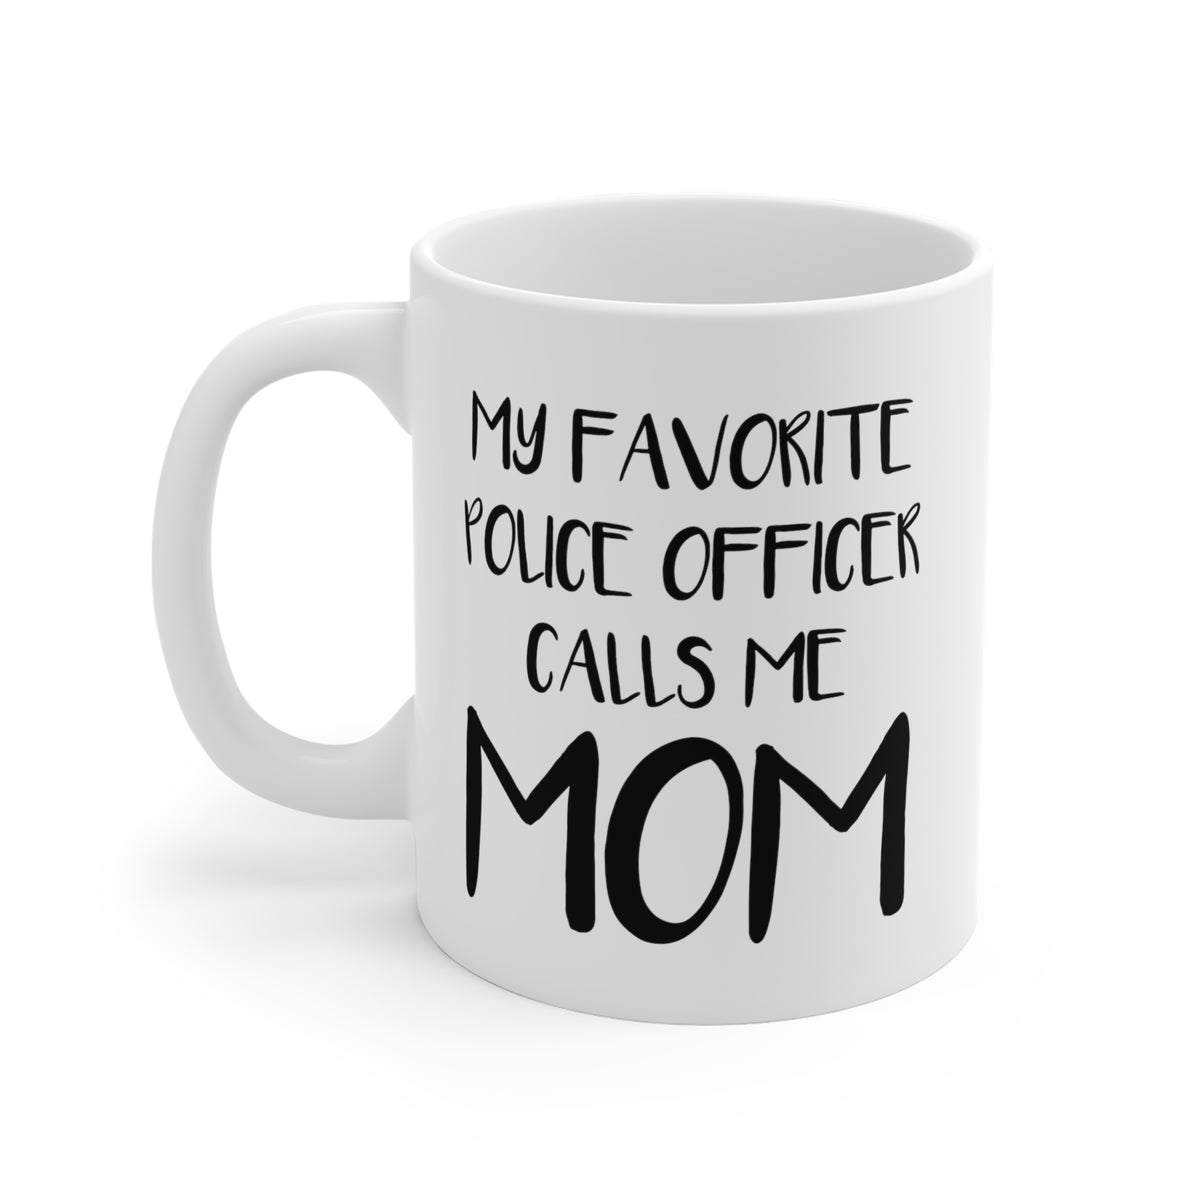 Police Mom Gifts - My Favorite Police Officer Calls Me Mom - Police Mom White Coffee Mug, Tea Cup - CA